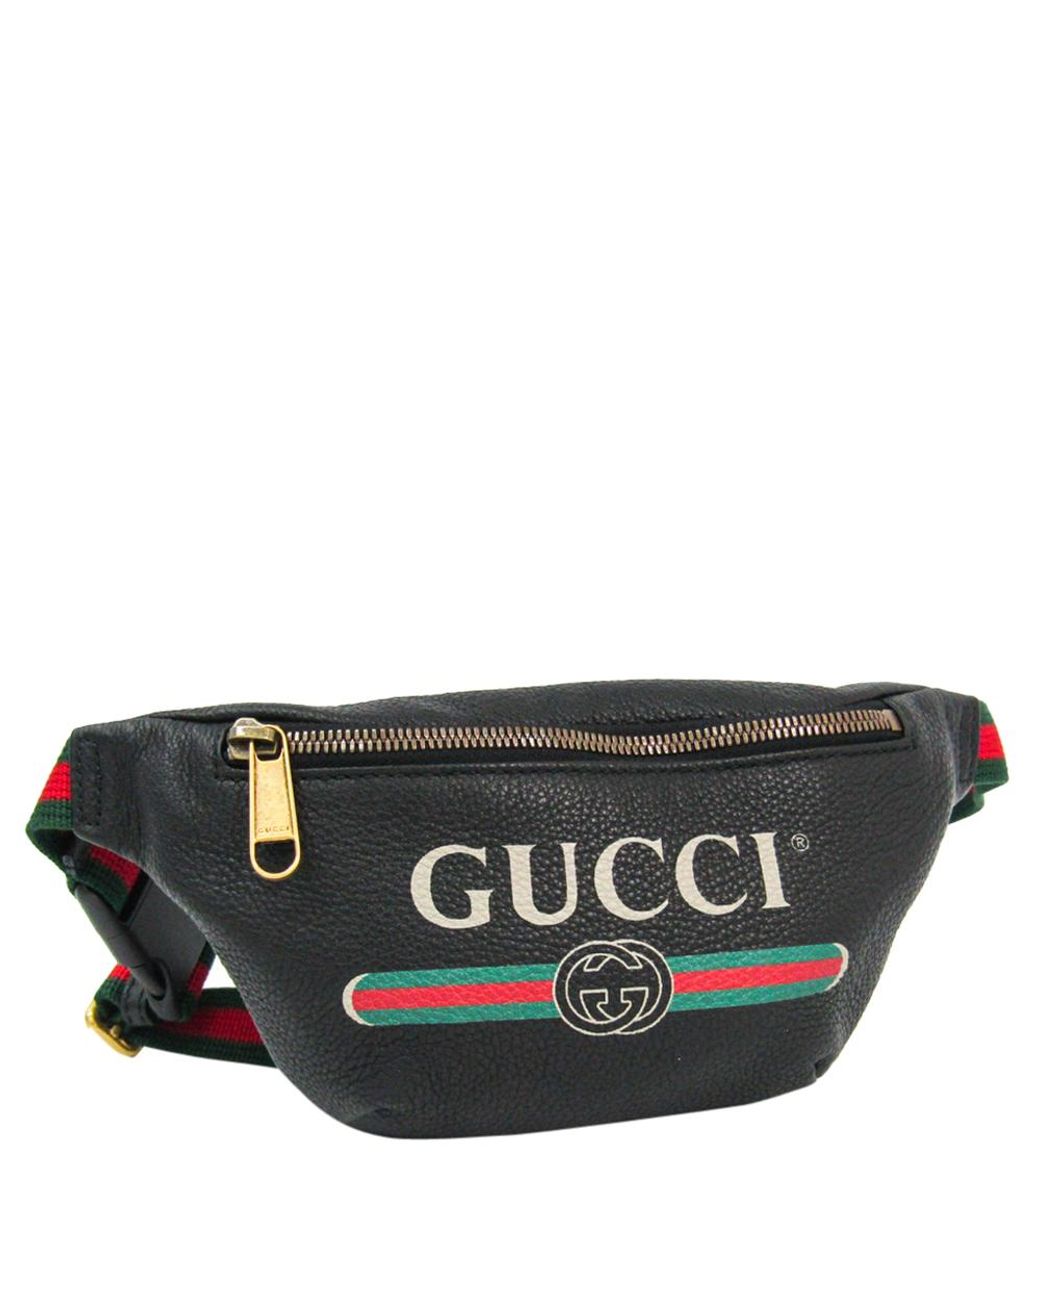 gucci belt bag small size